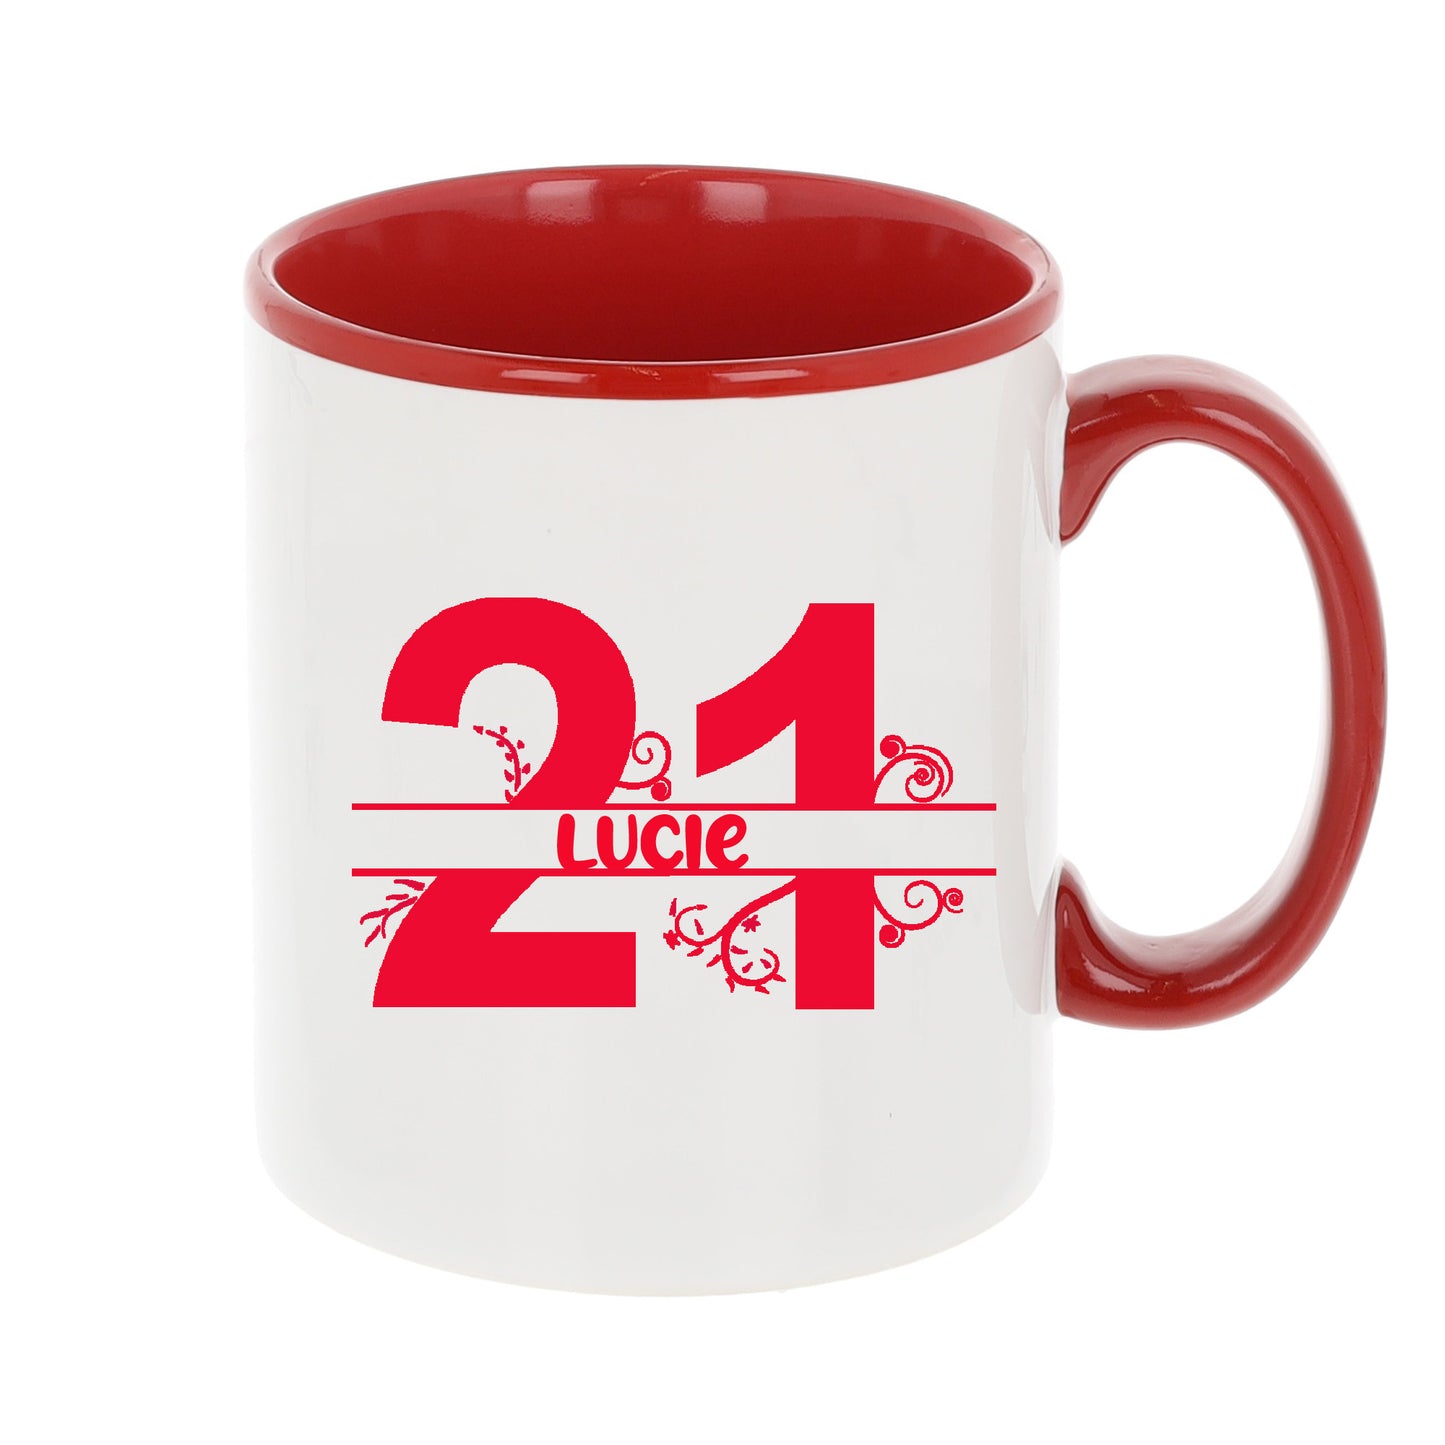 Personalised Filled 21st Birthday Mug  - Always Looking Good - Red Mug Only  